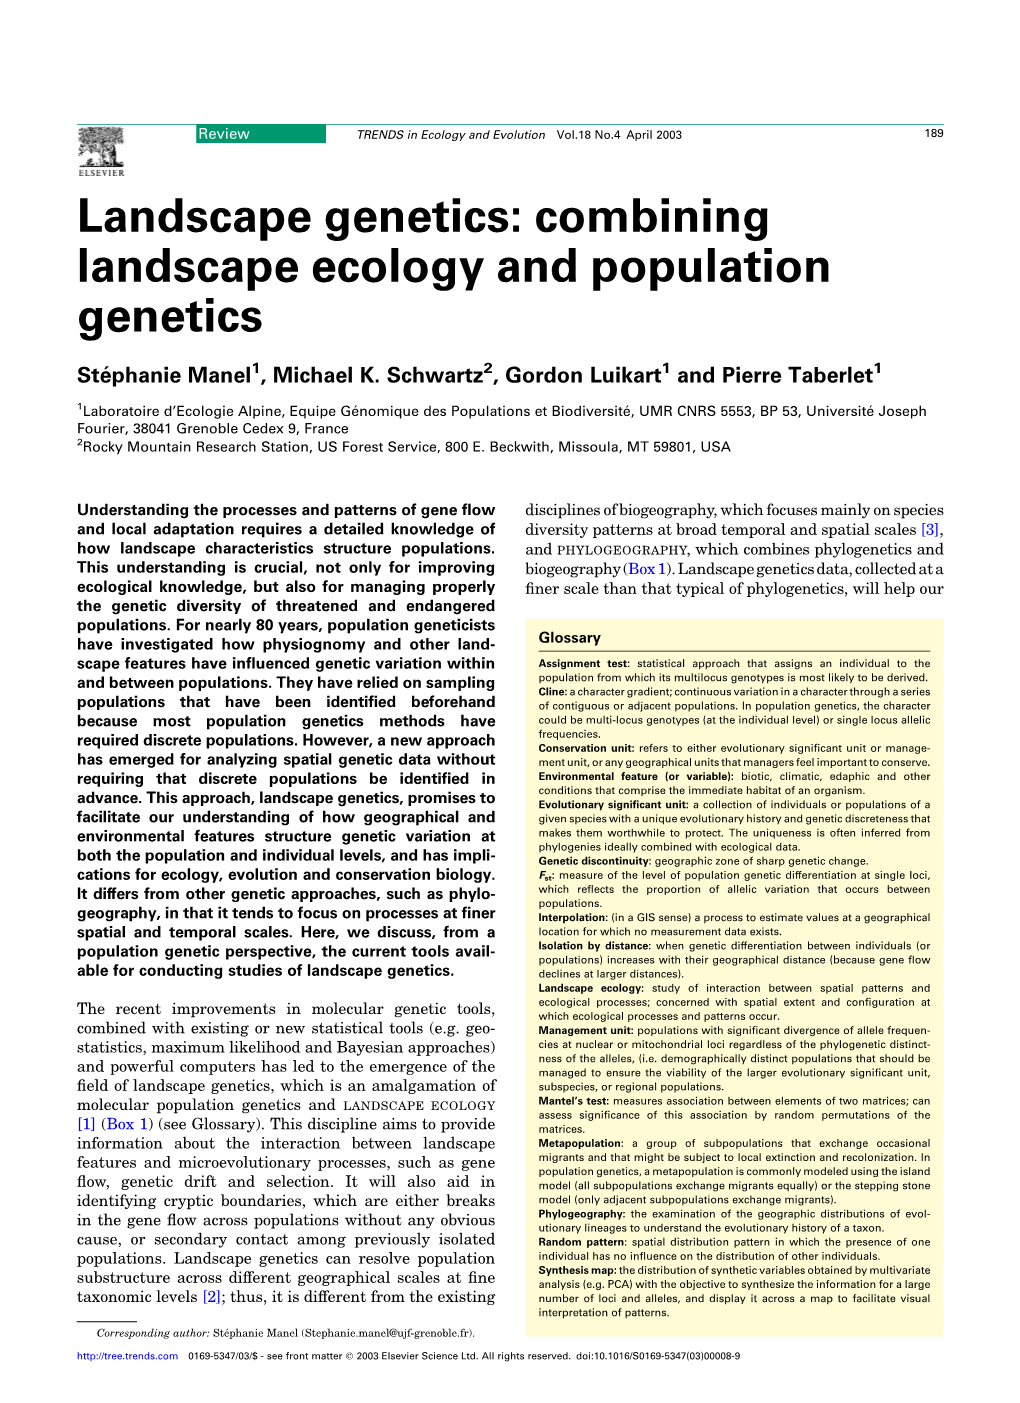 Combining Landscape Ecology and Population Genetics